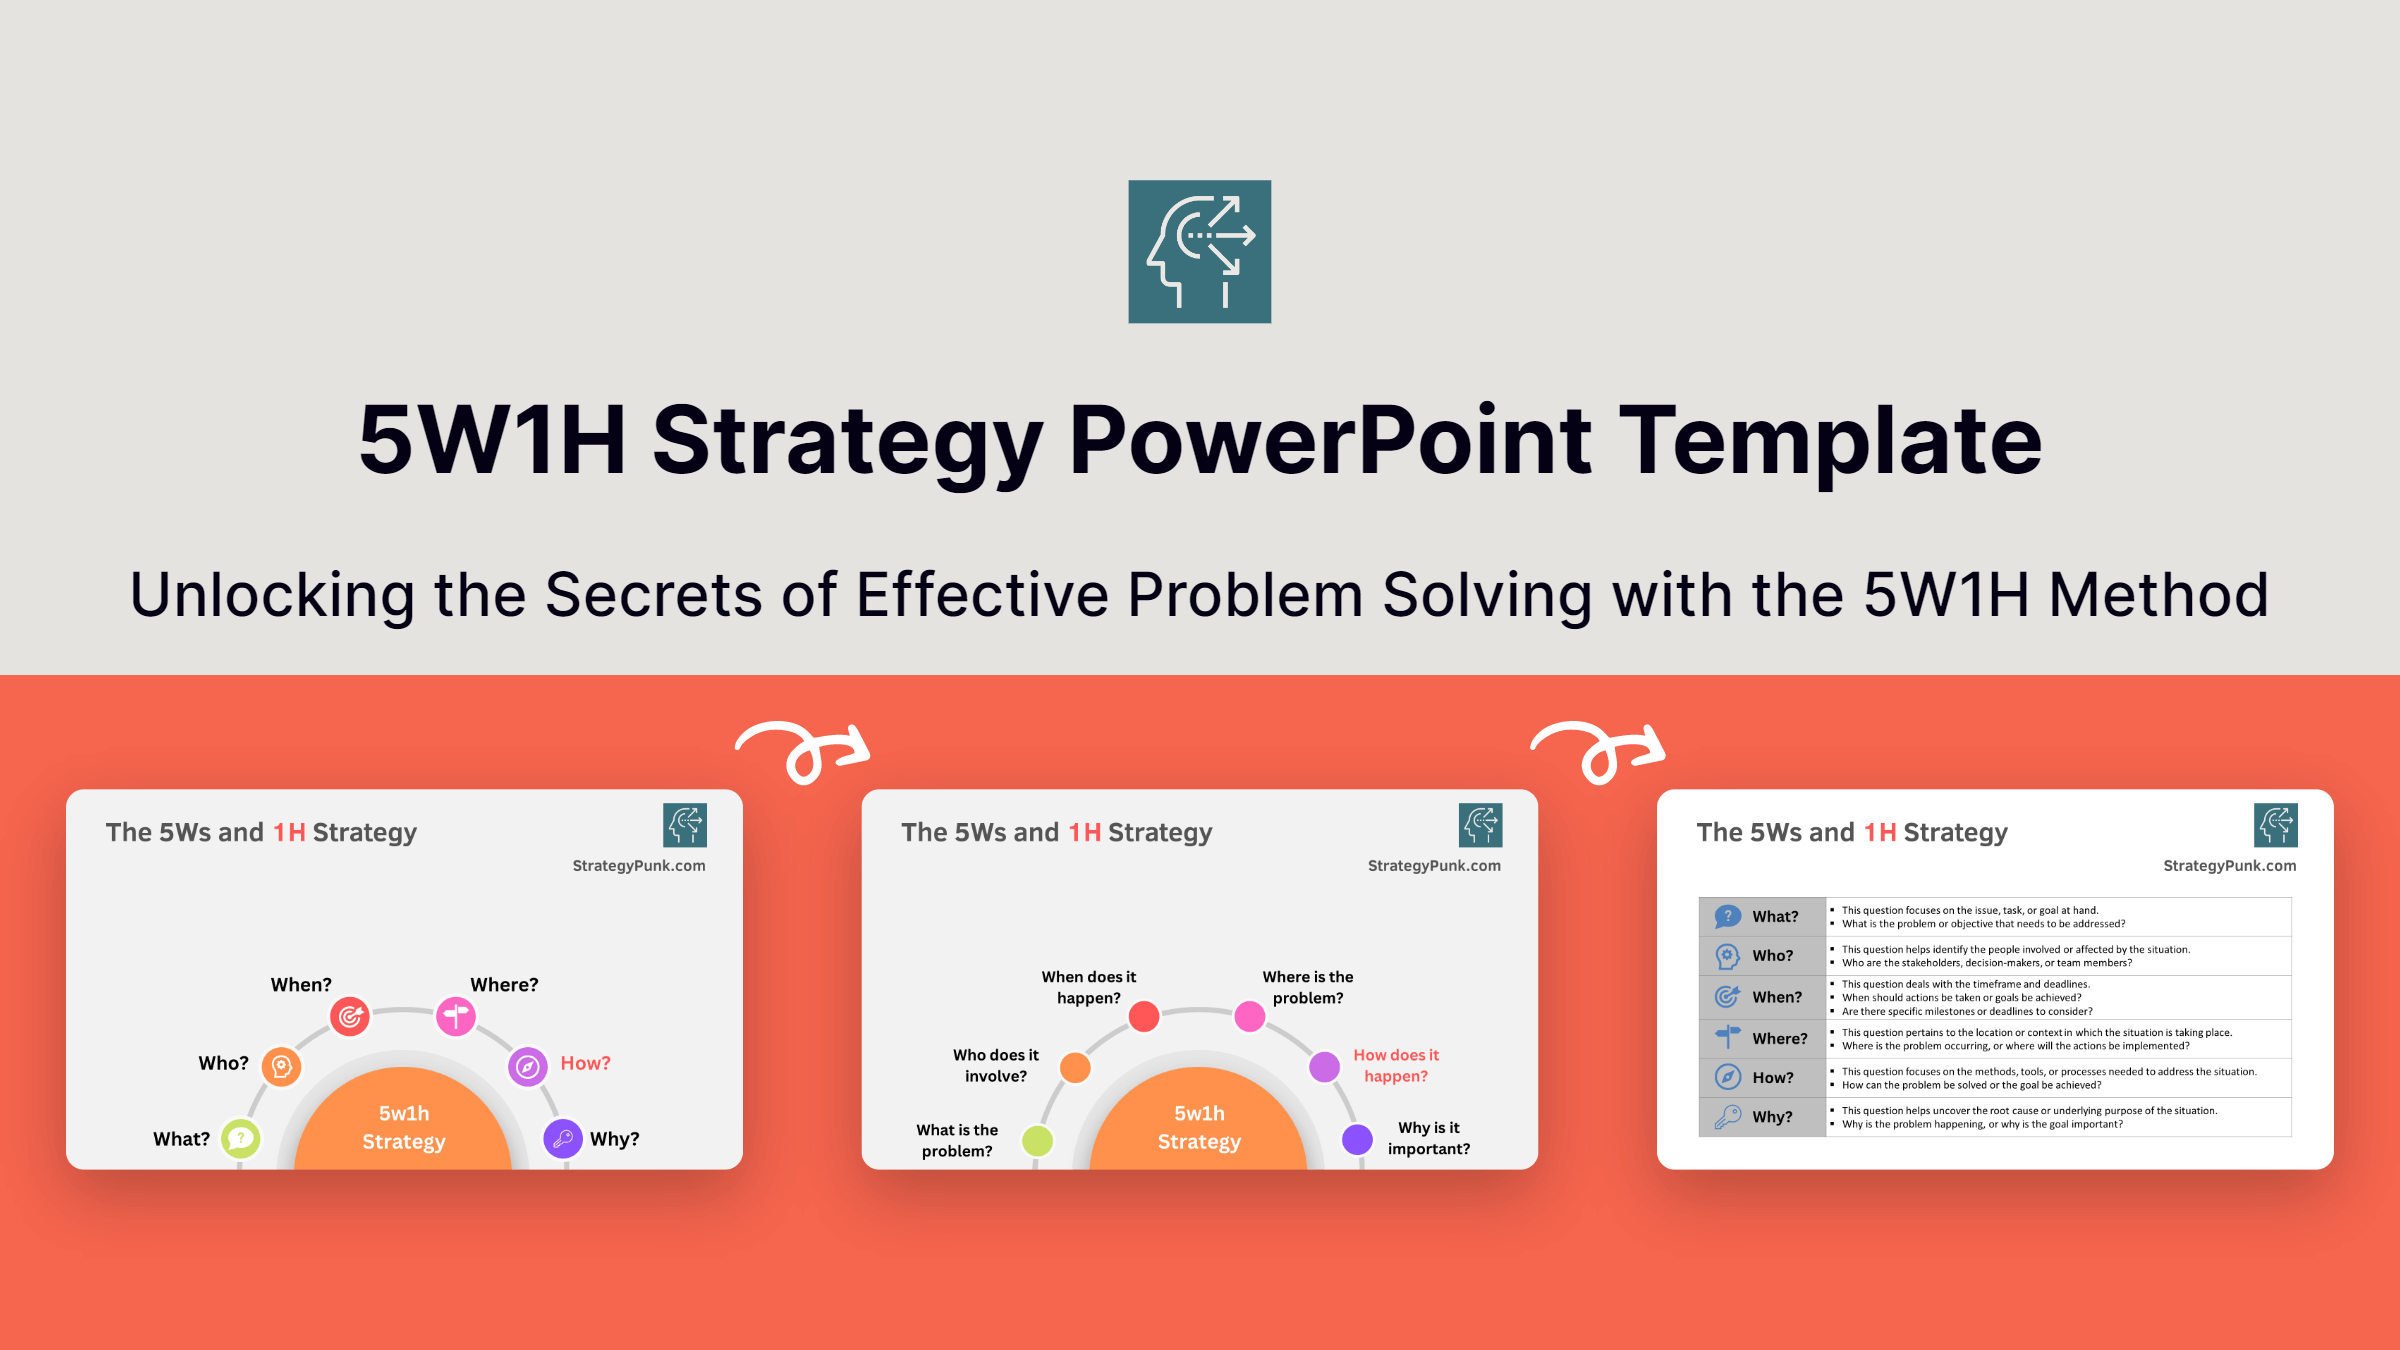 5W1H Method: Unlocking the Secrets of Effective Problem Solving